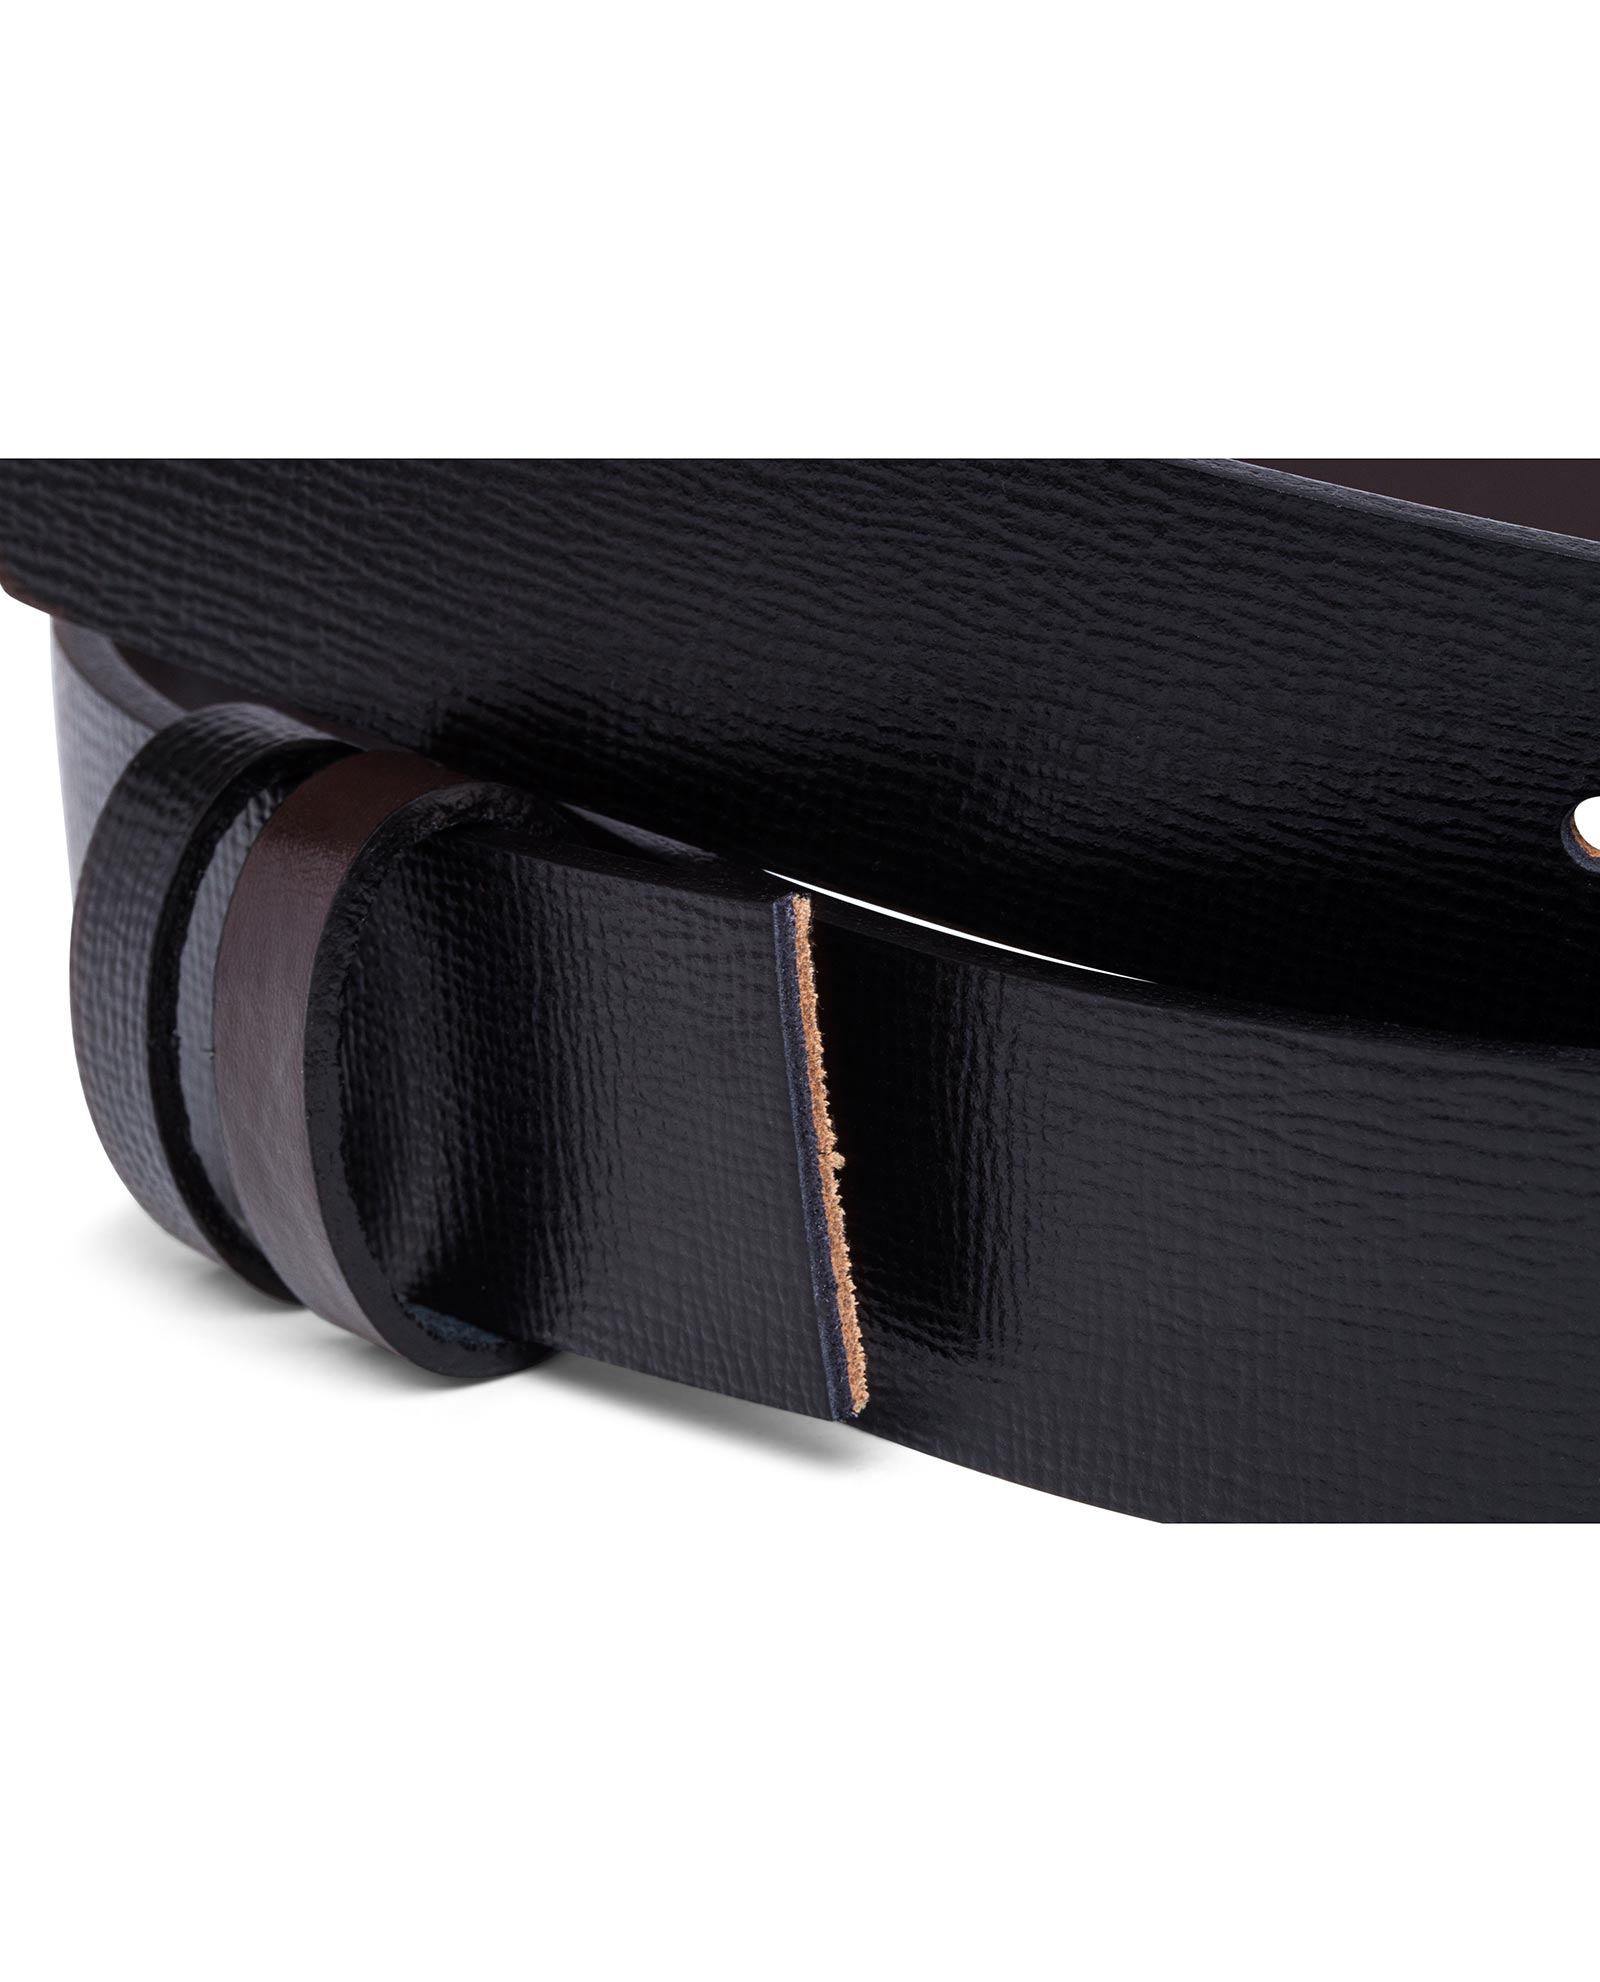  DJCAIZYY 1 3/8 (35mm) Reversible Belt Buckle